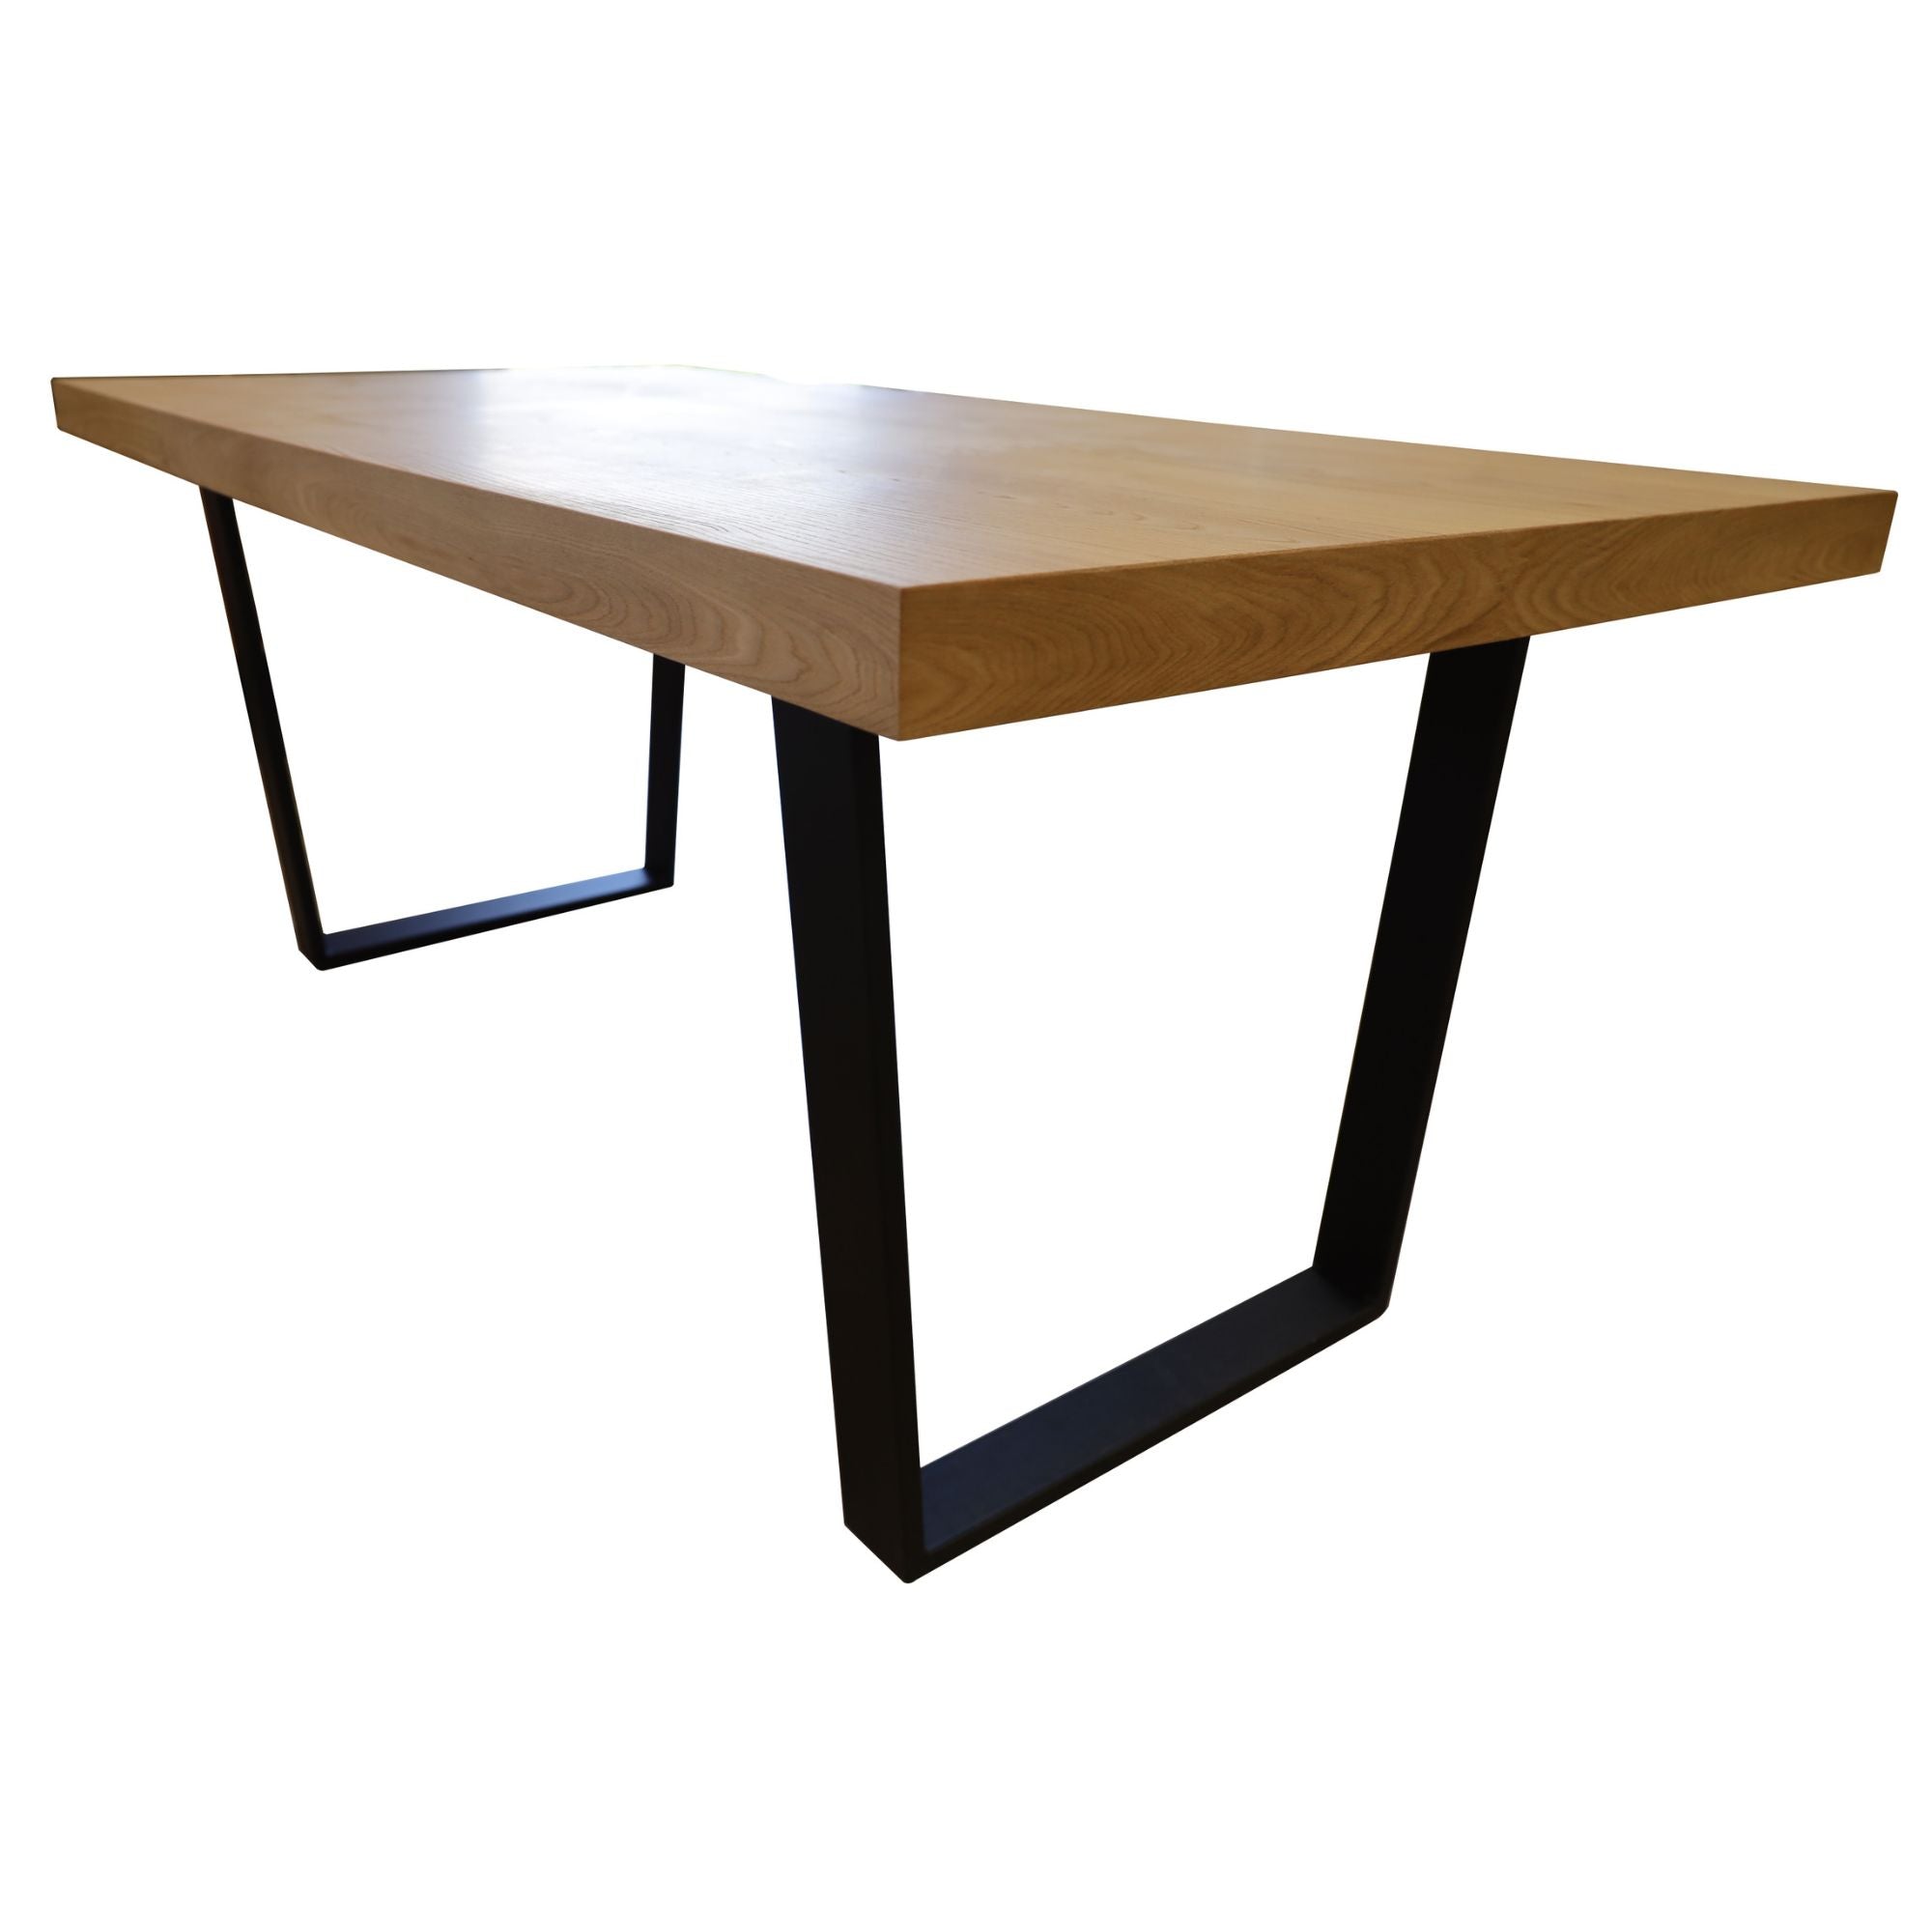 Petunia  9pc 210cm Dining Table Set 8 Wishbone Chair Elm Timber Wood Metal Leg - SILBERSHELL